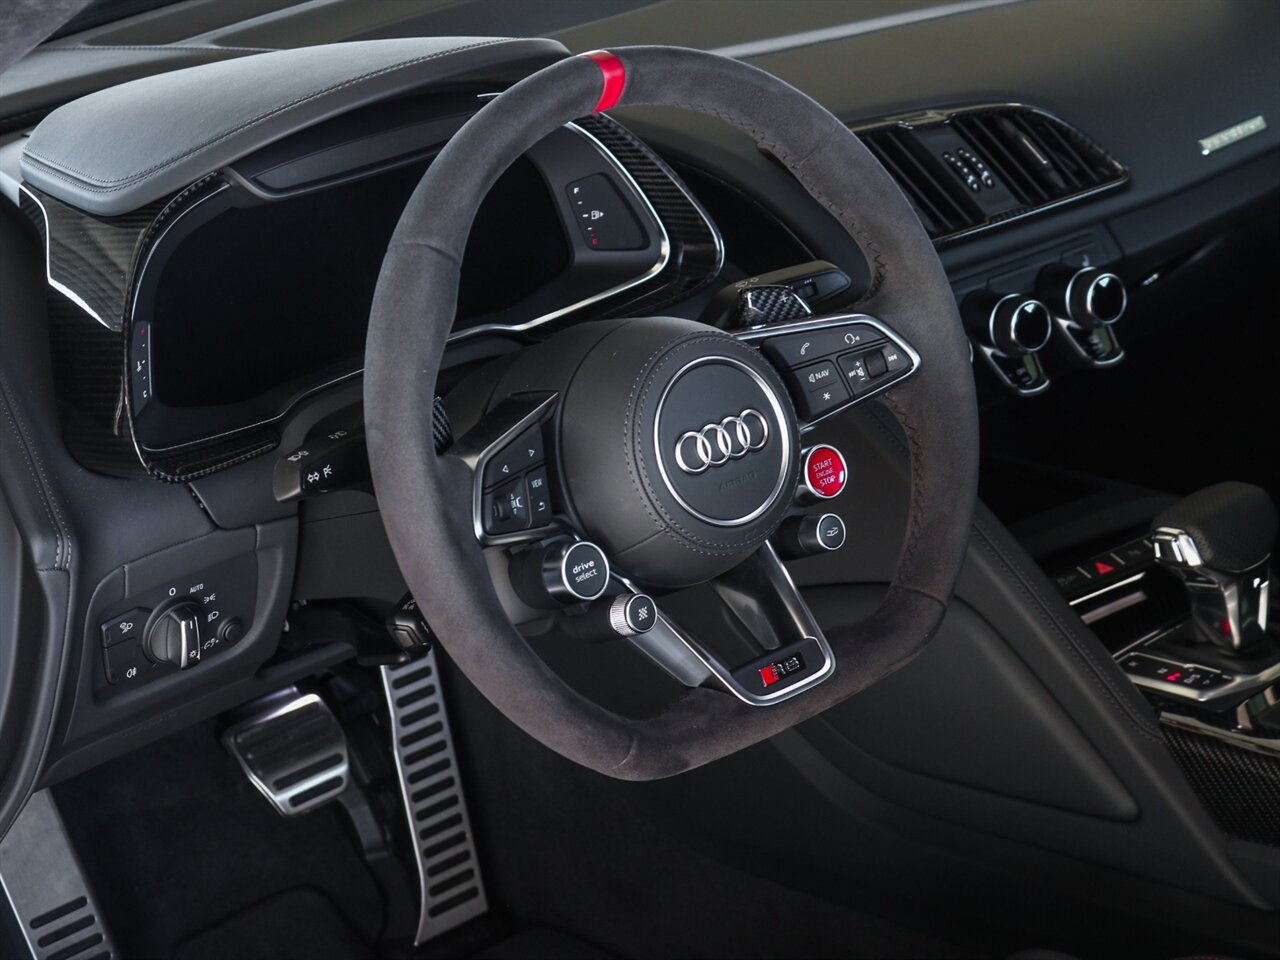 2018 Audi R8 5.2 quattro V10 Plus  Performance Edition, 1 of 10 for USA - Photo 36 - Springfield, MO 65802